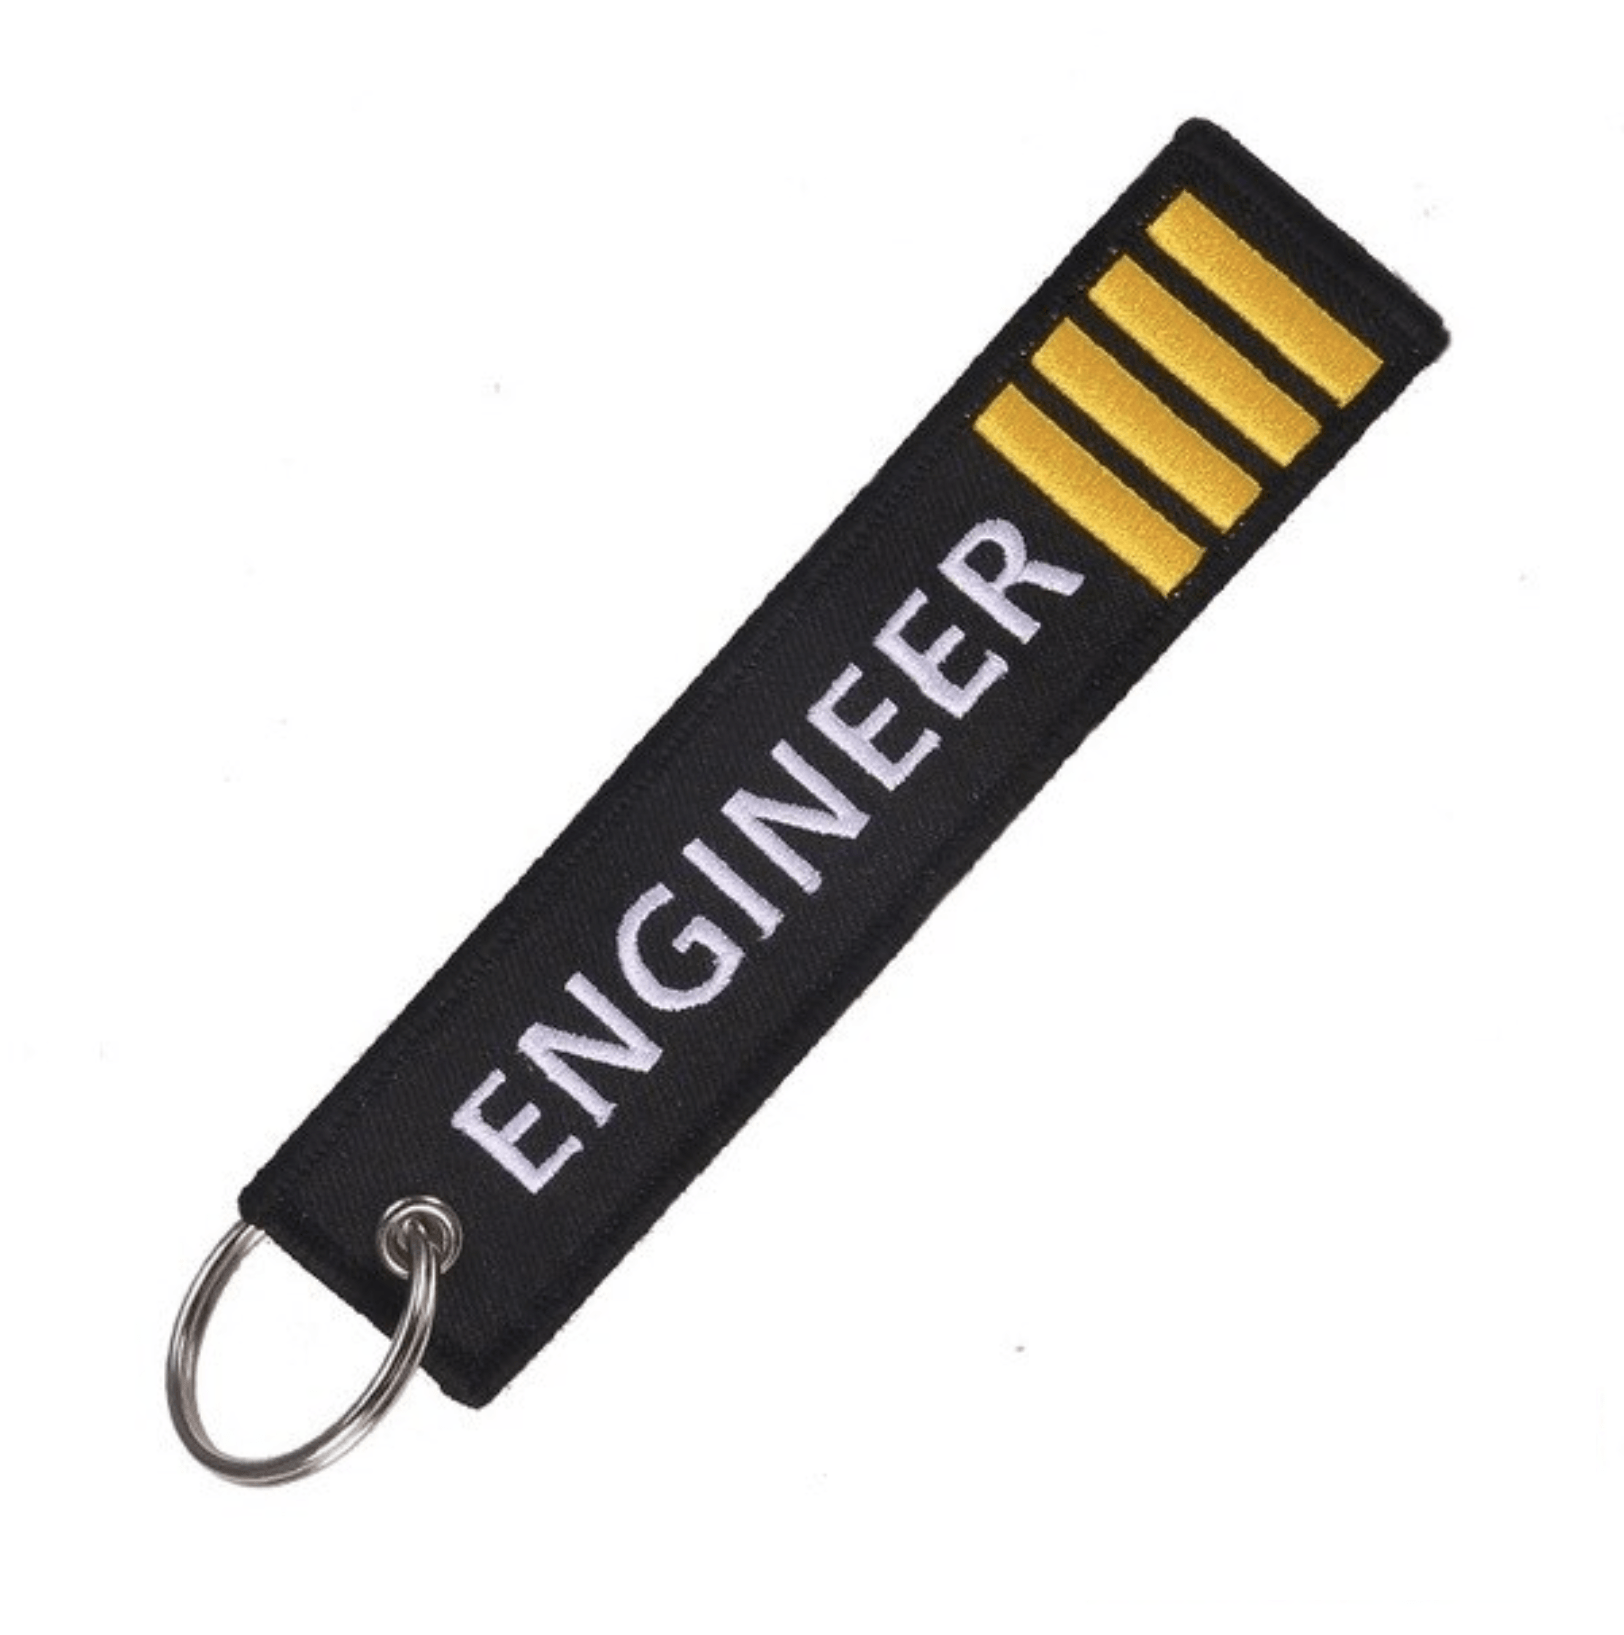 Aircraft Engineer Keychain - 25center.com